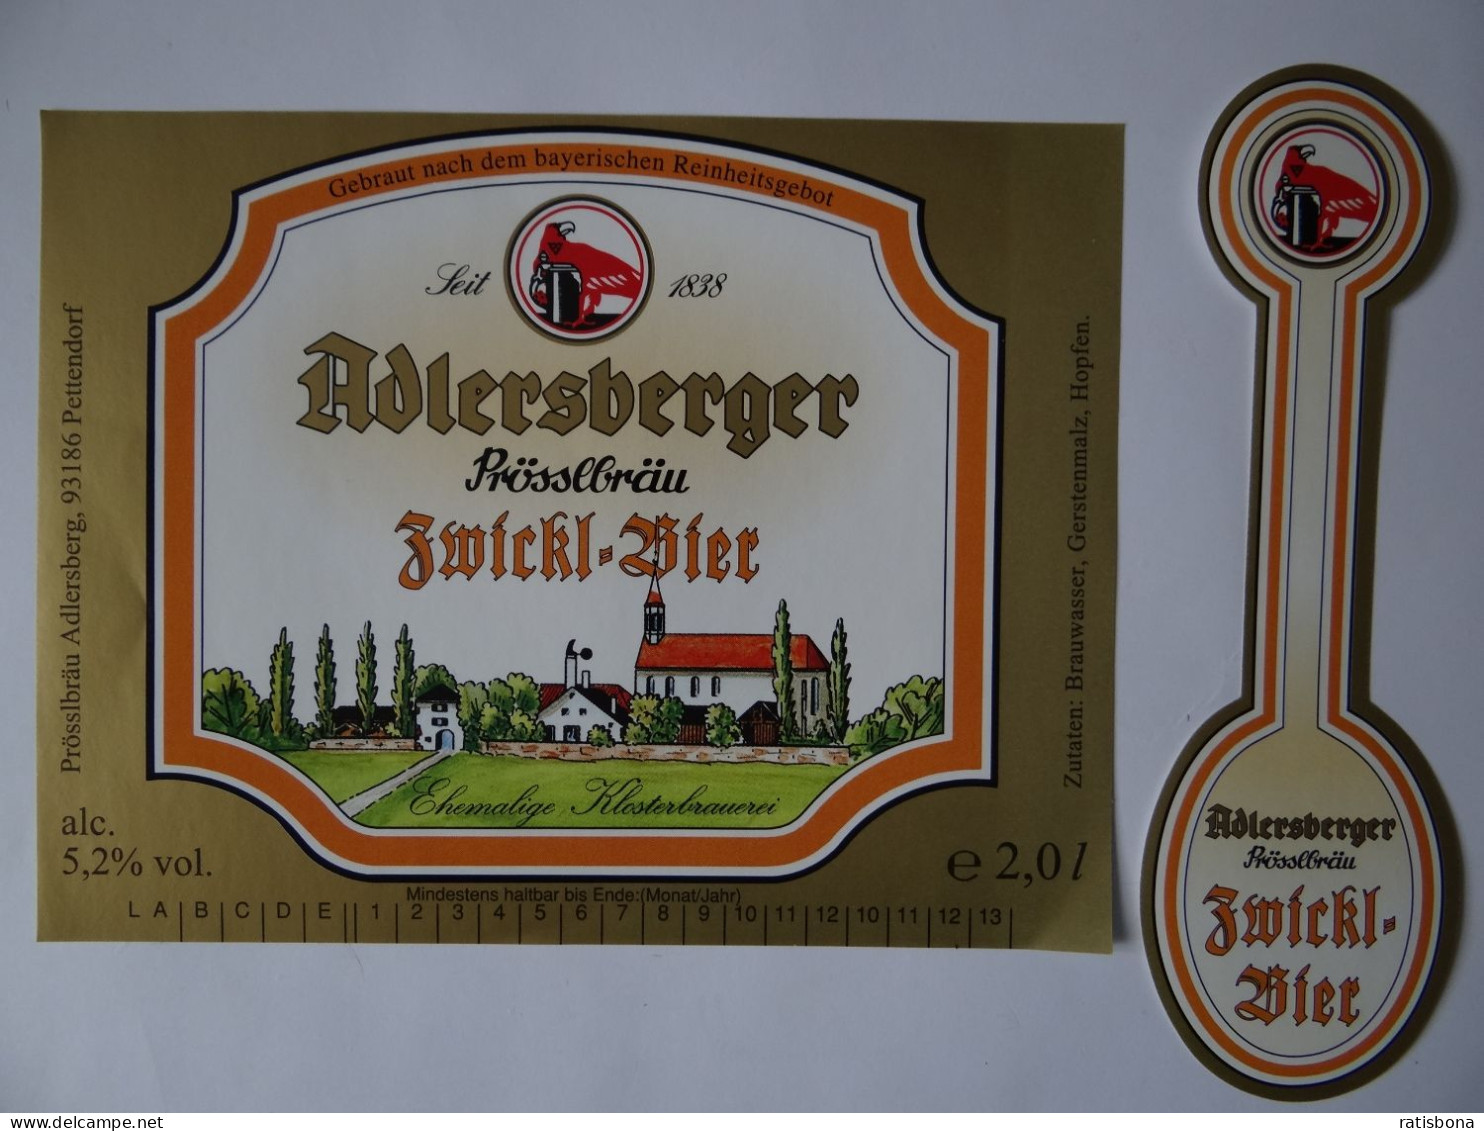 5 + 1 Bier-Etiketten, Plus 2 Liter Zwickl, - Prösslbräu, Adlersberg, Bayern, Germany - Bier